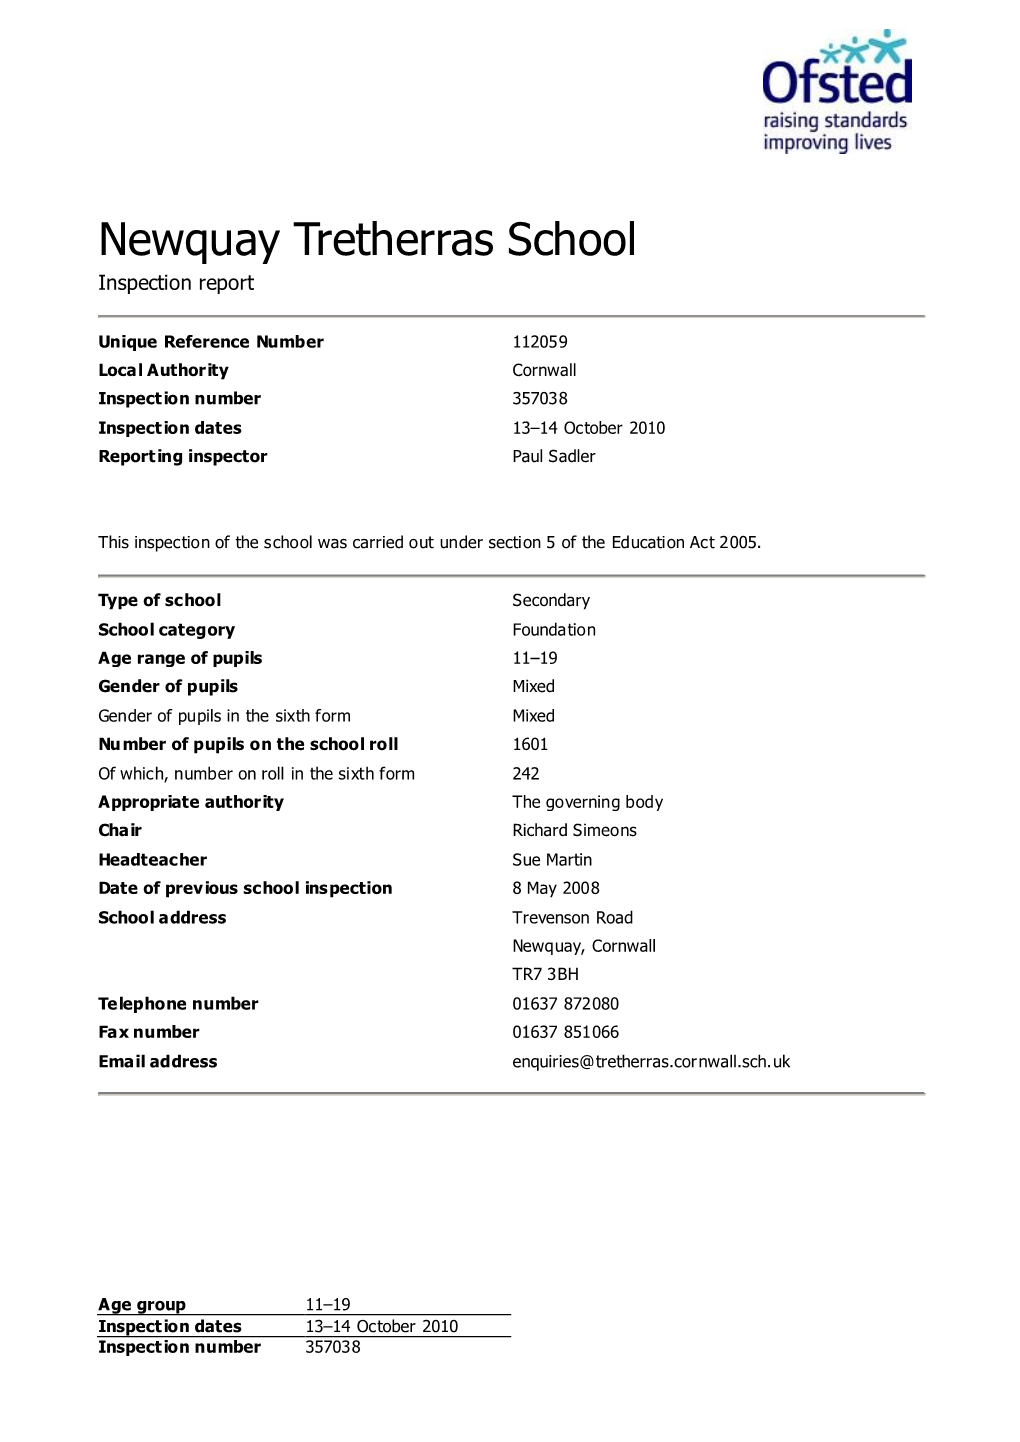 Newquay Tretherras School Inspection Report